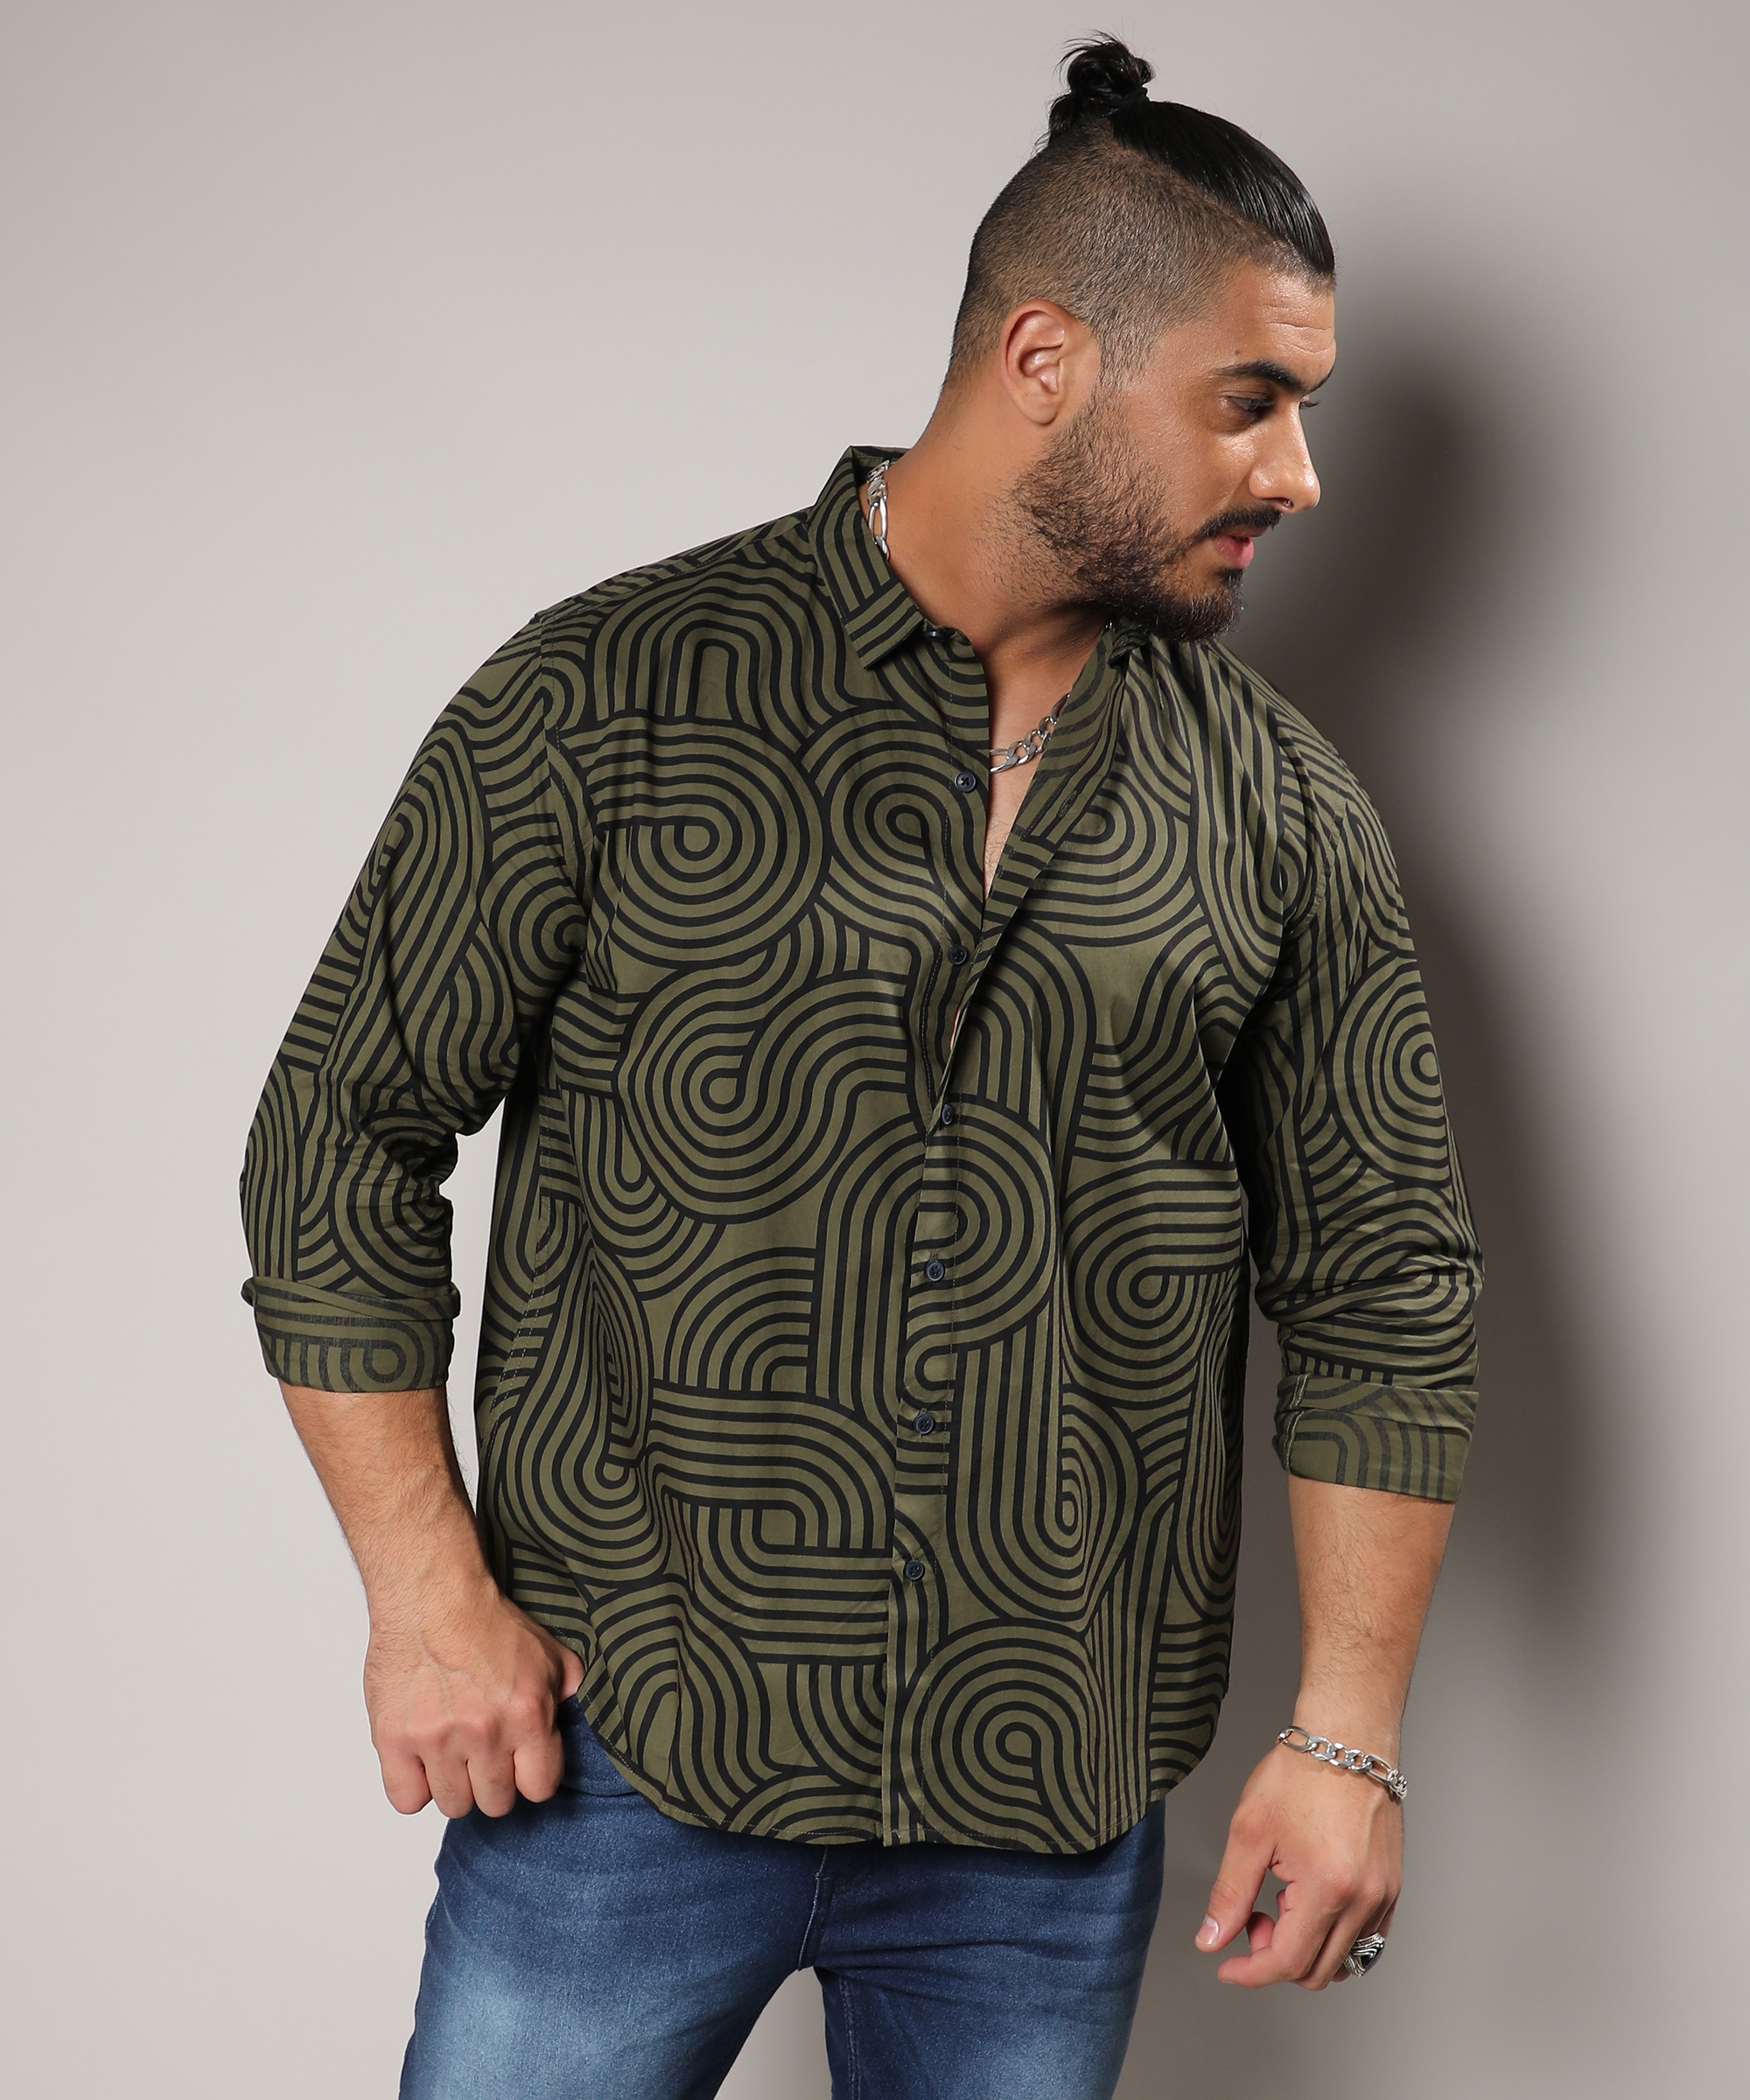 Instafab Plus | Men's Army Green & Black Contrast Lines Shirt